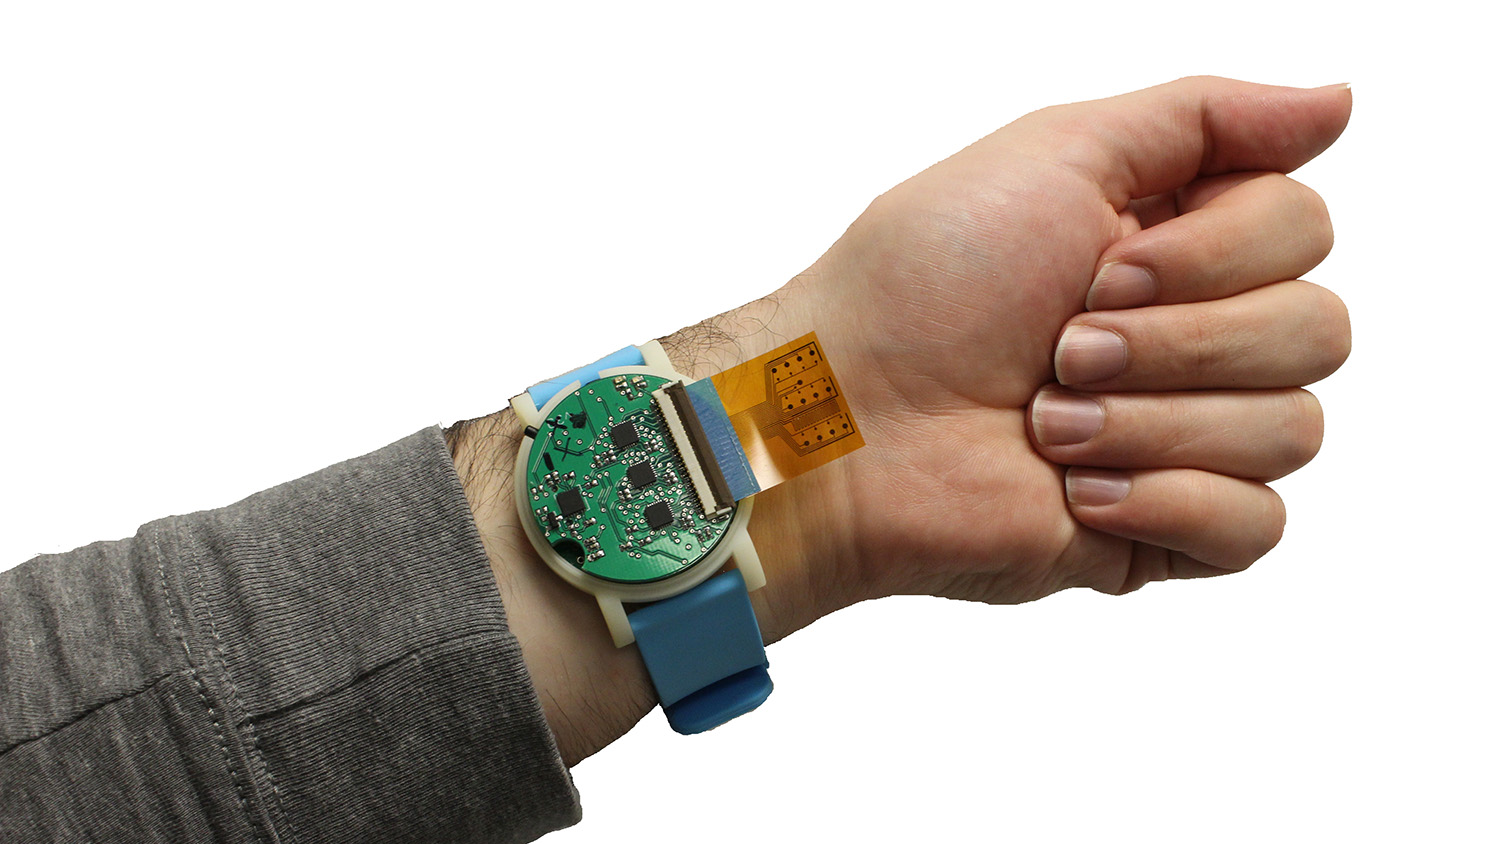 wristwatch-like sensor being worn on someone's arm